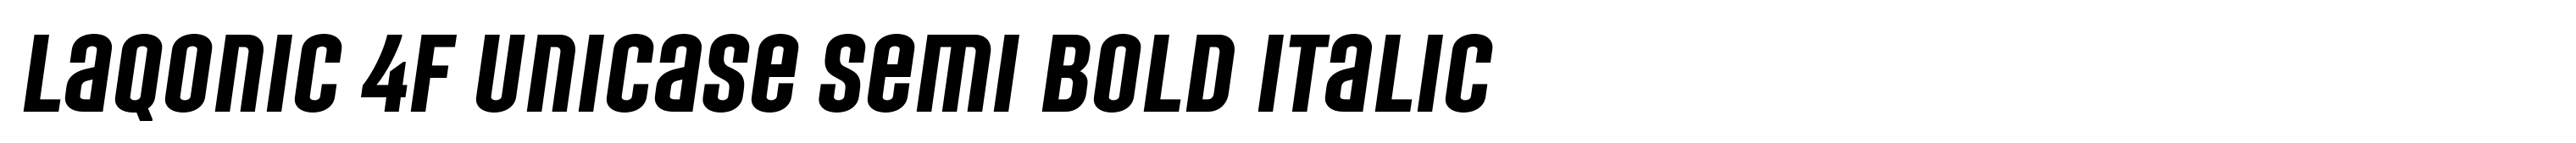 Laqonic 4F Unicase Semi Bold Italic